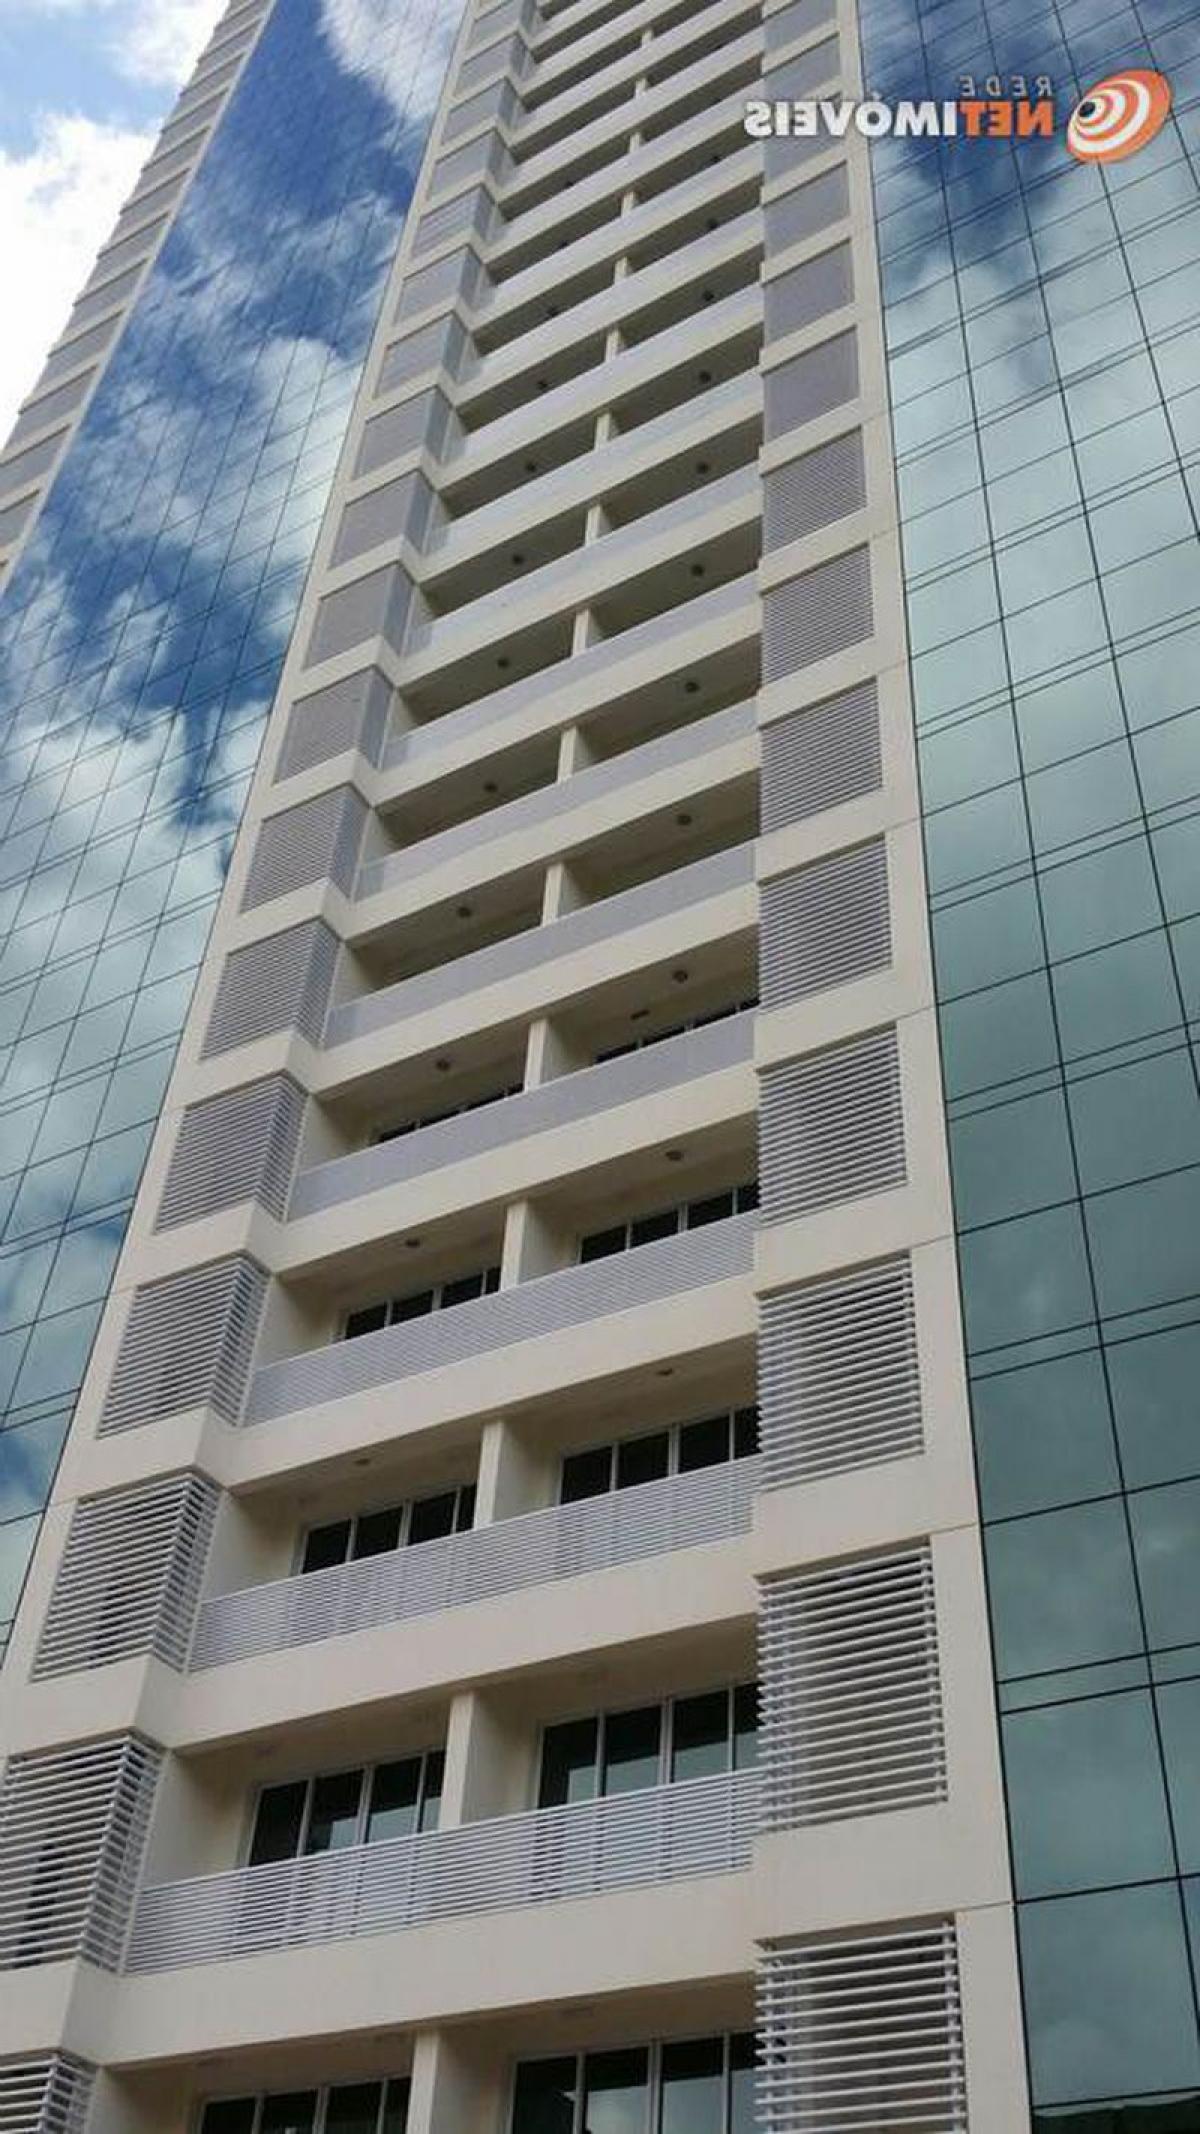 Picture of Commercial Building For Sale in Barueri, Sao Paulo, Brazil